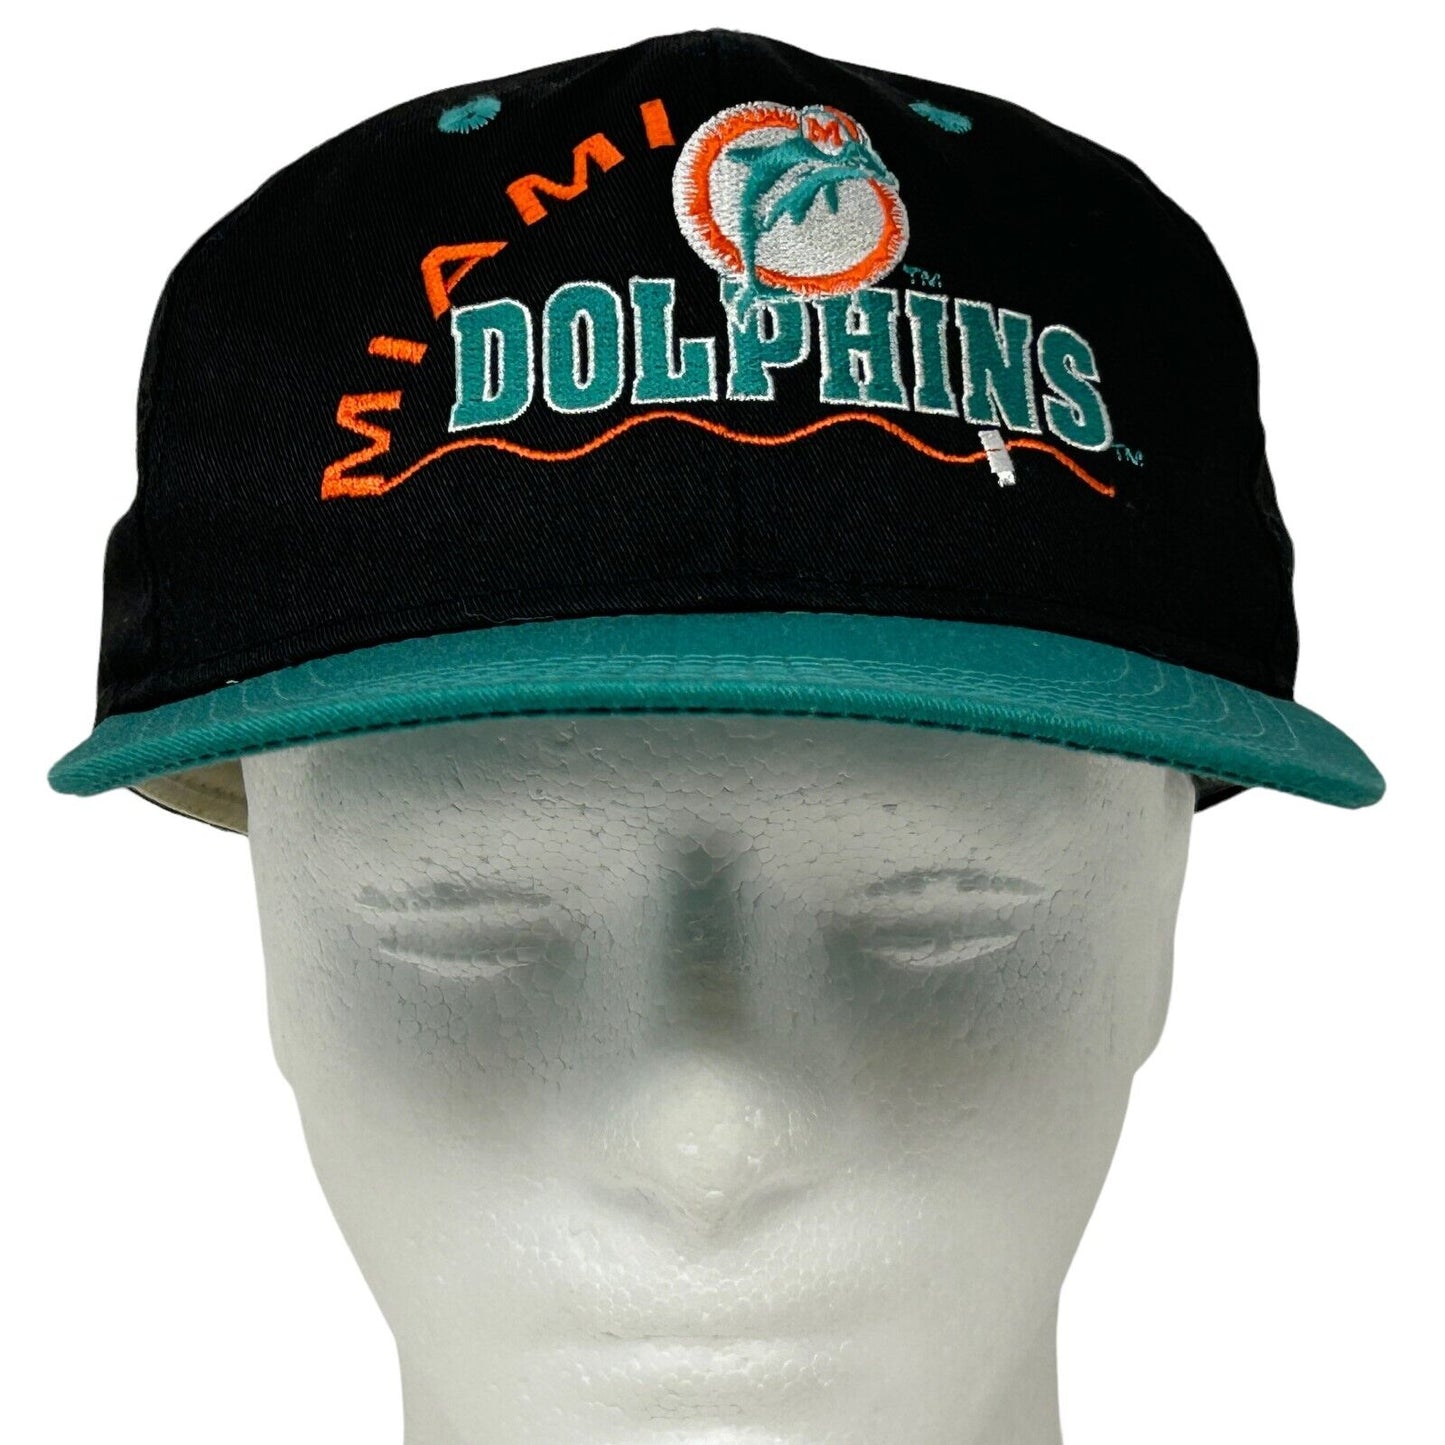 Miami Dolphins Drawstring Hat Vintage 90s Black NFL Football USA Baseball Cap